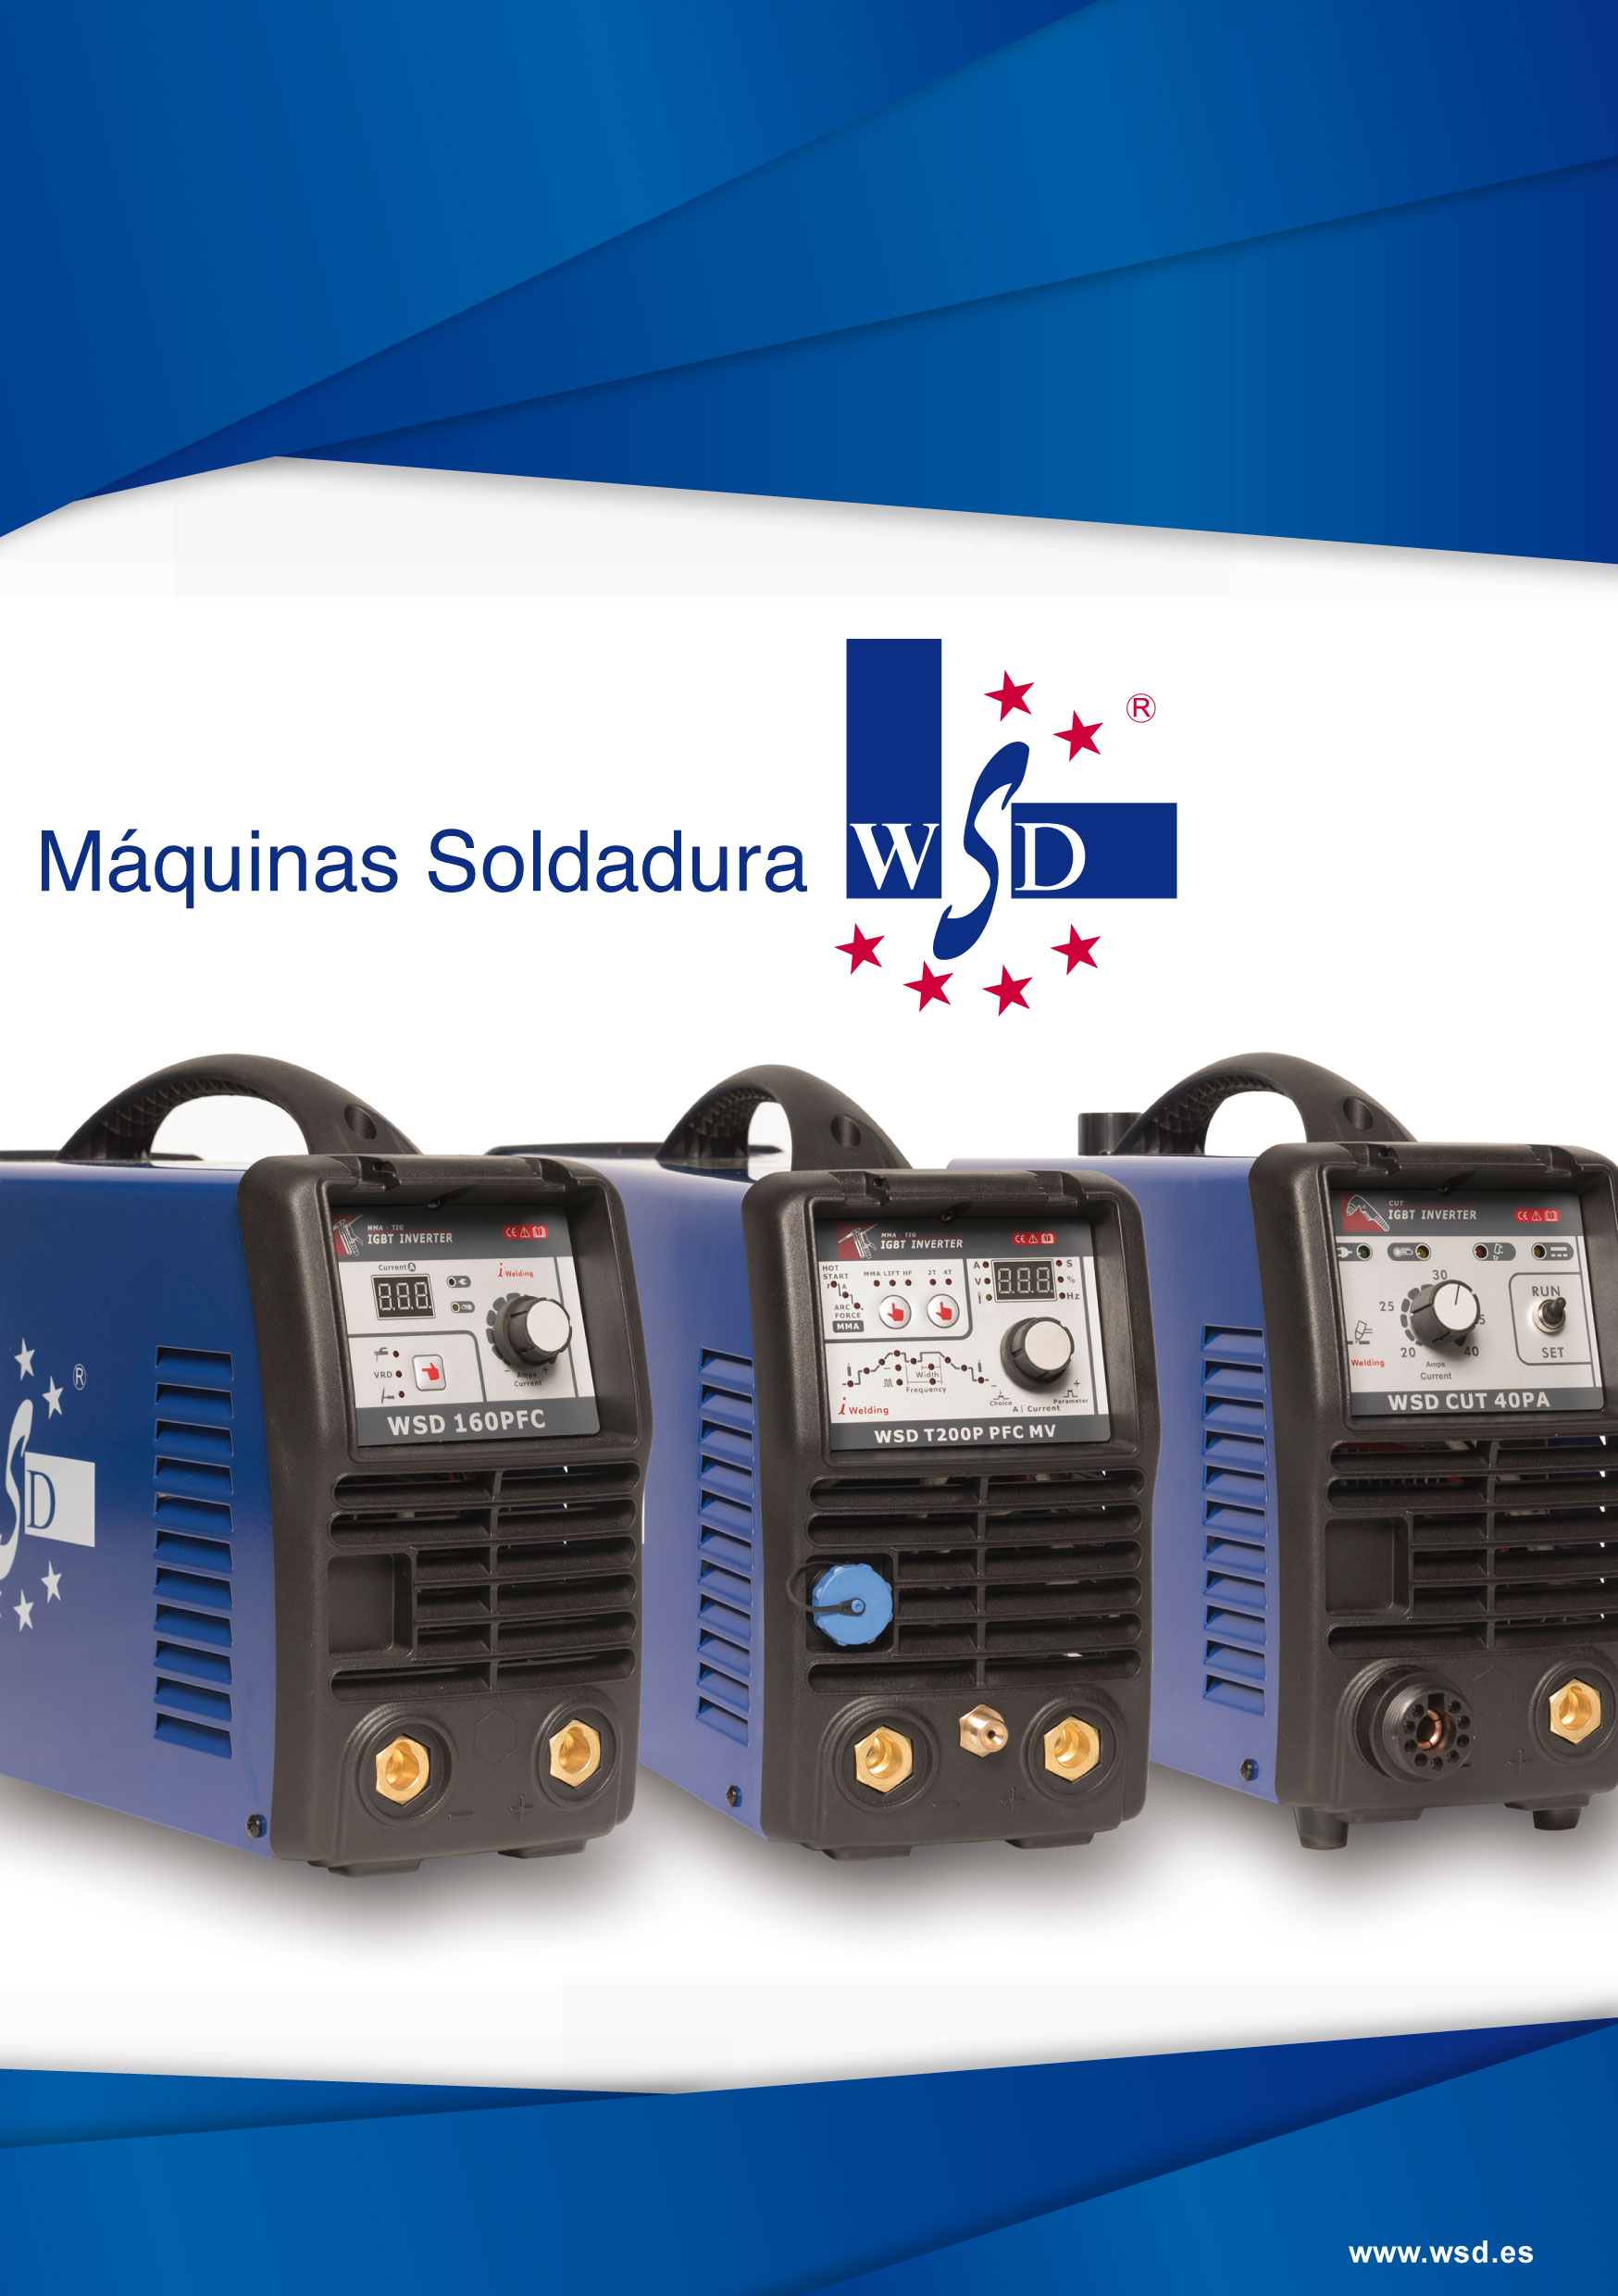 Maquinas-Soldadura-WSD-portada.jpg